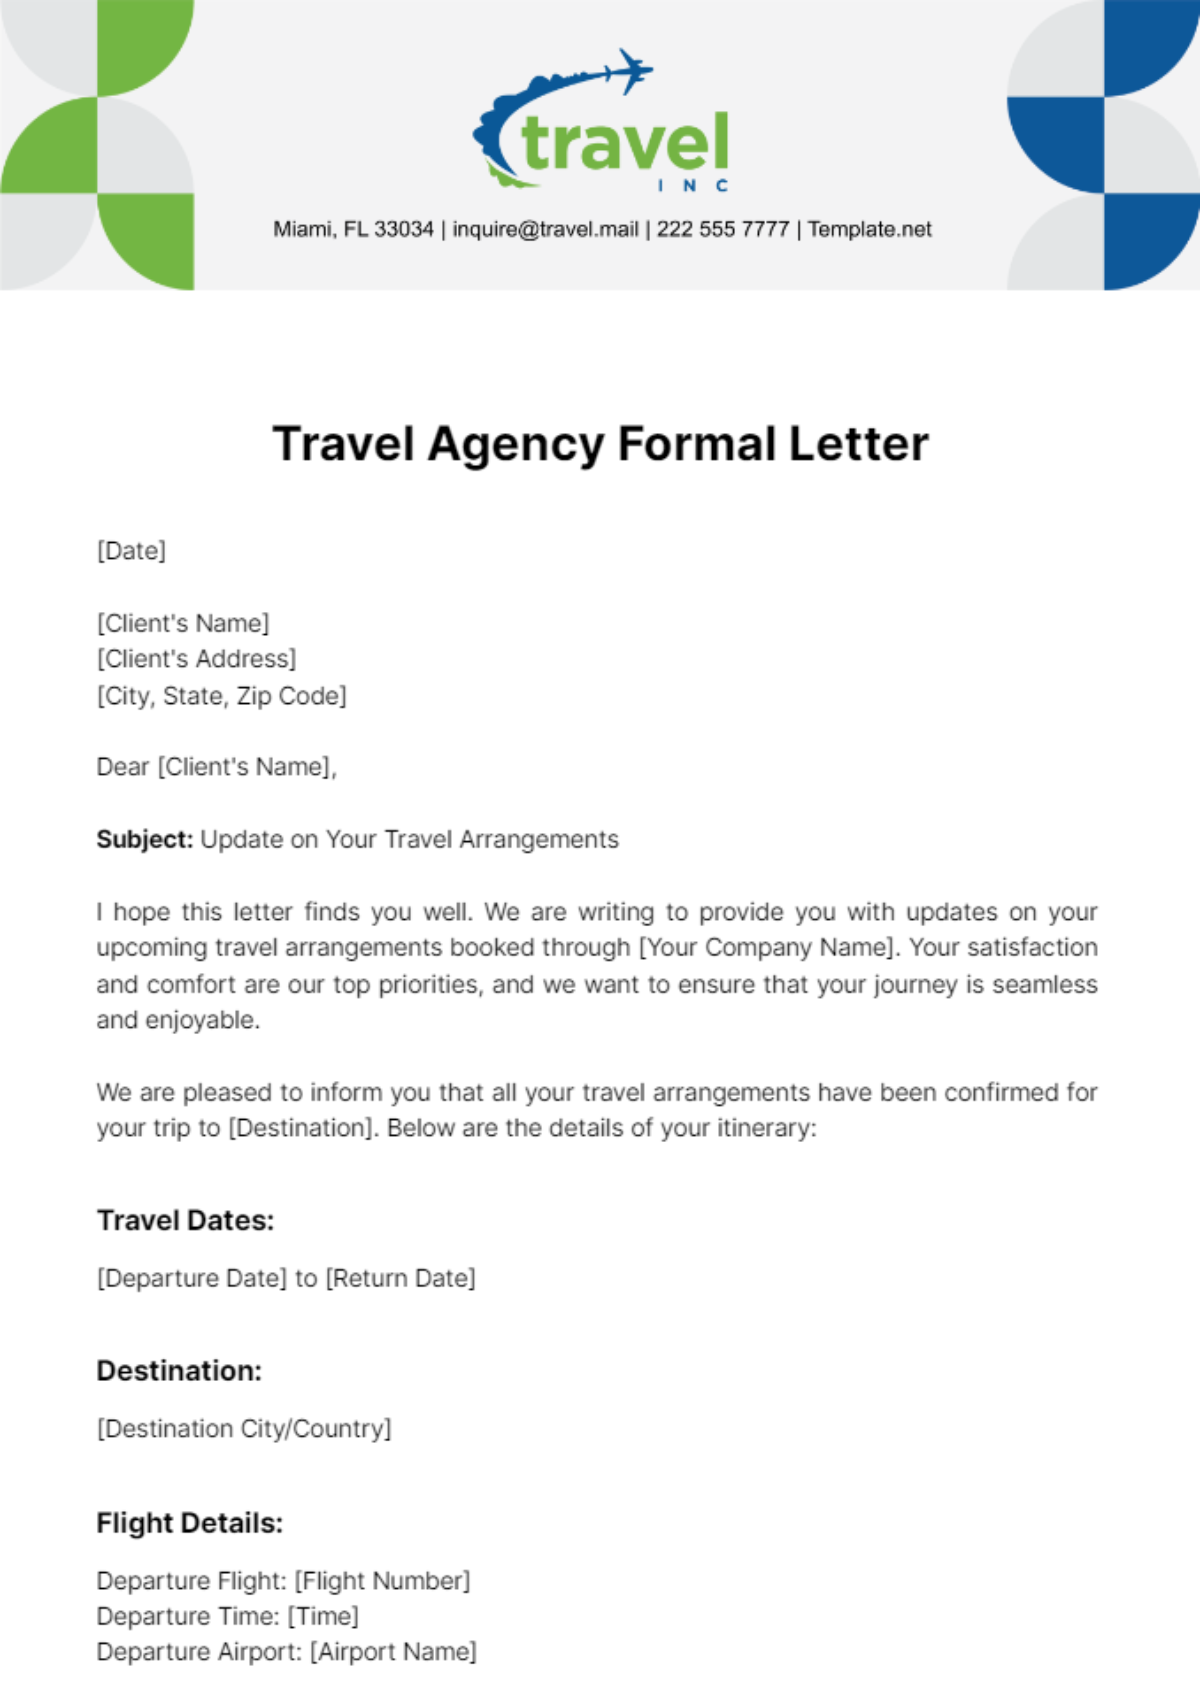 Travel Agency Formal Letter Template